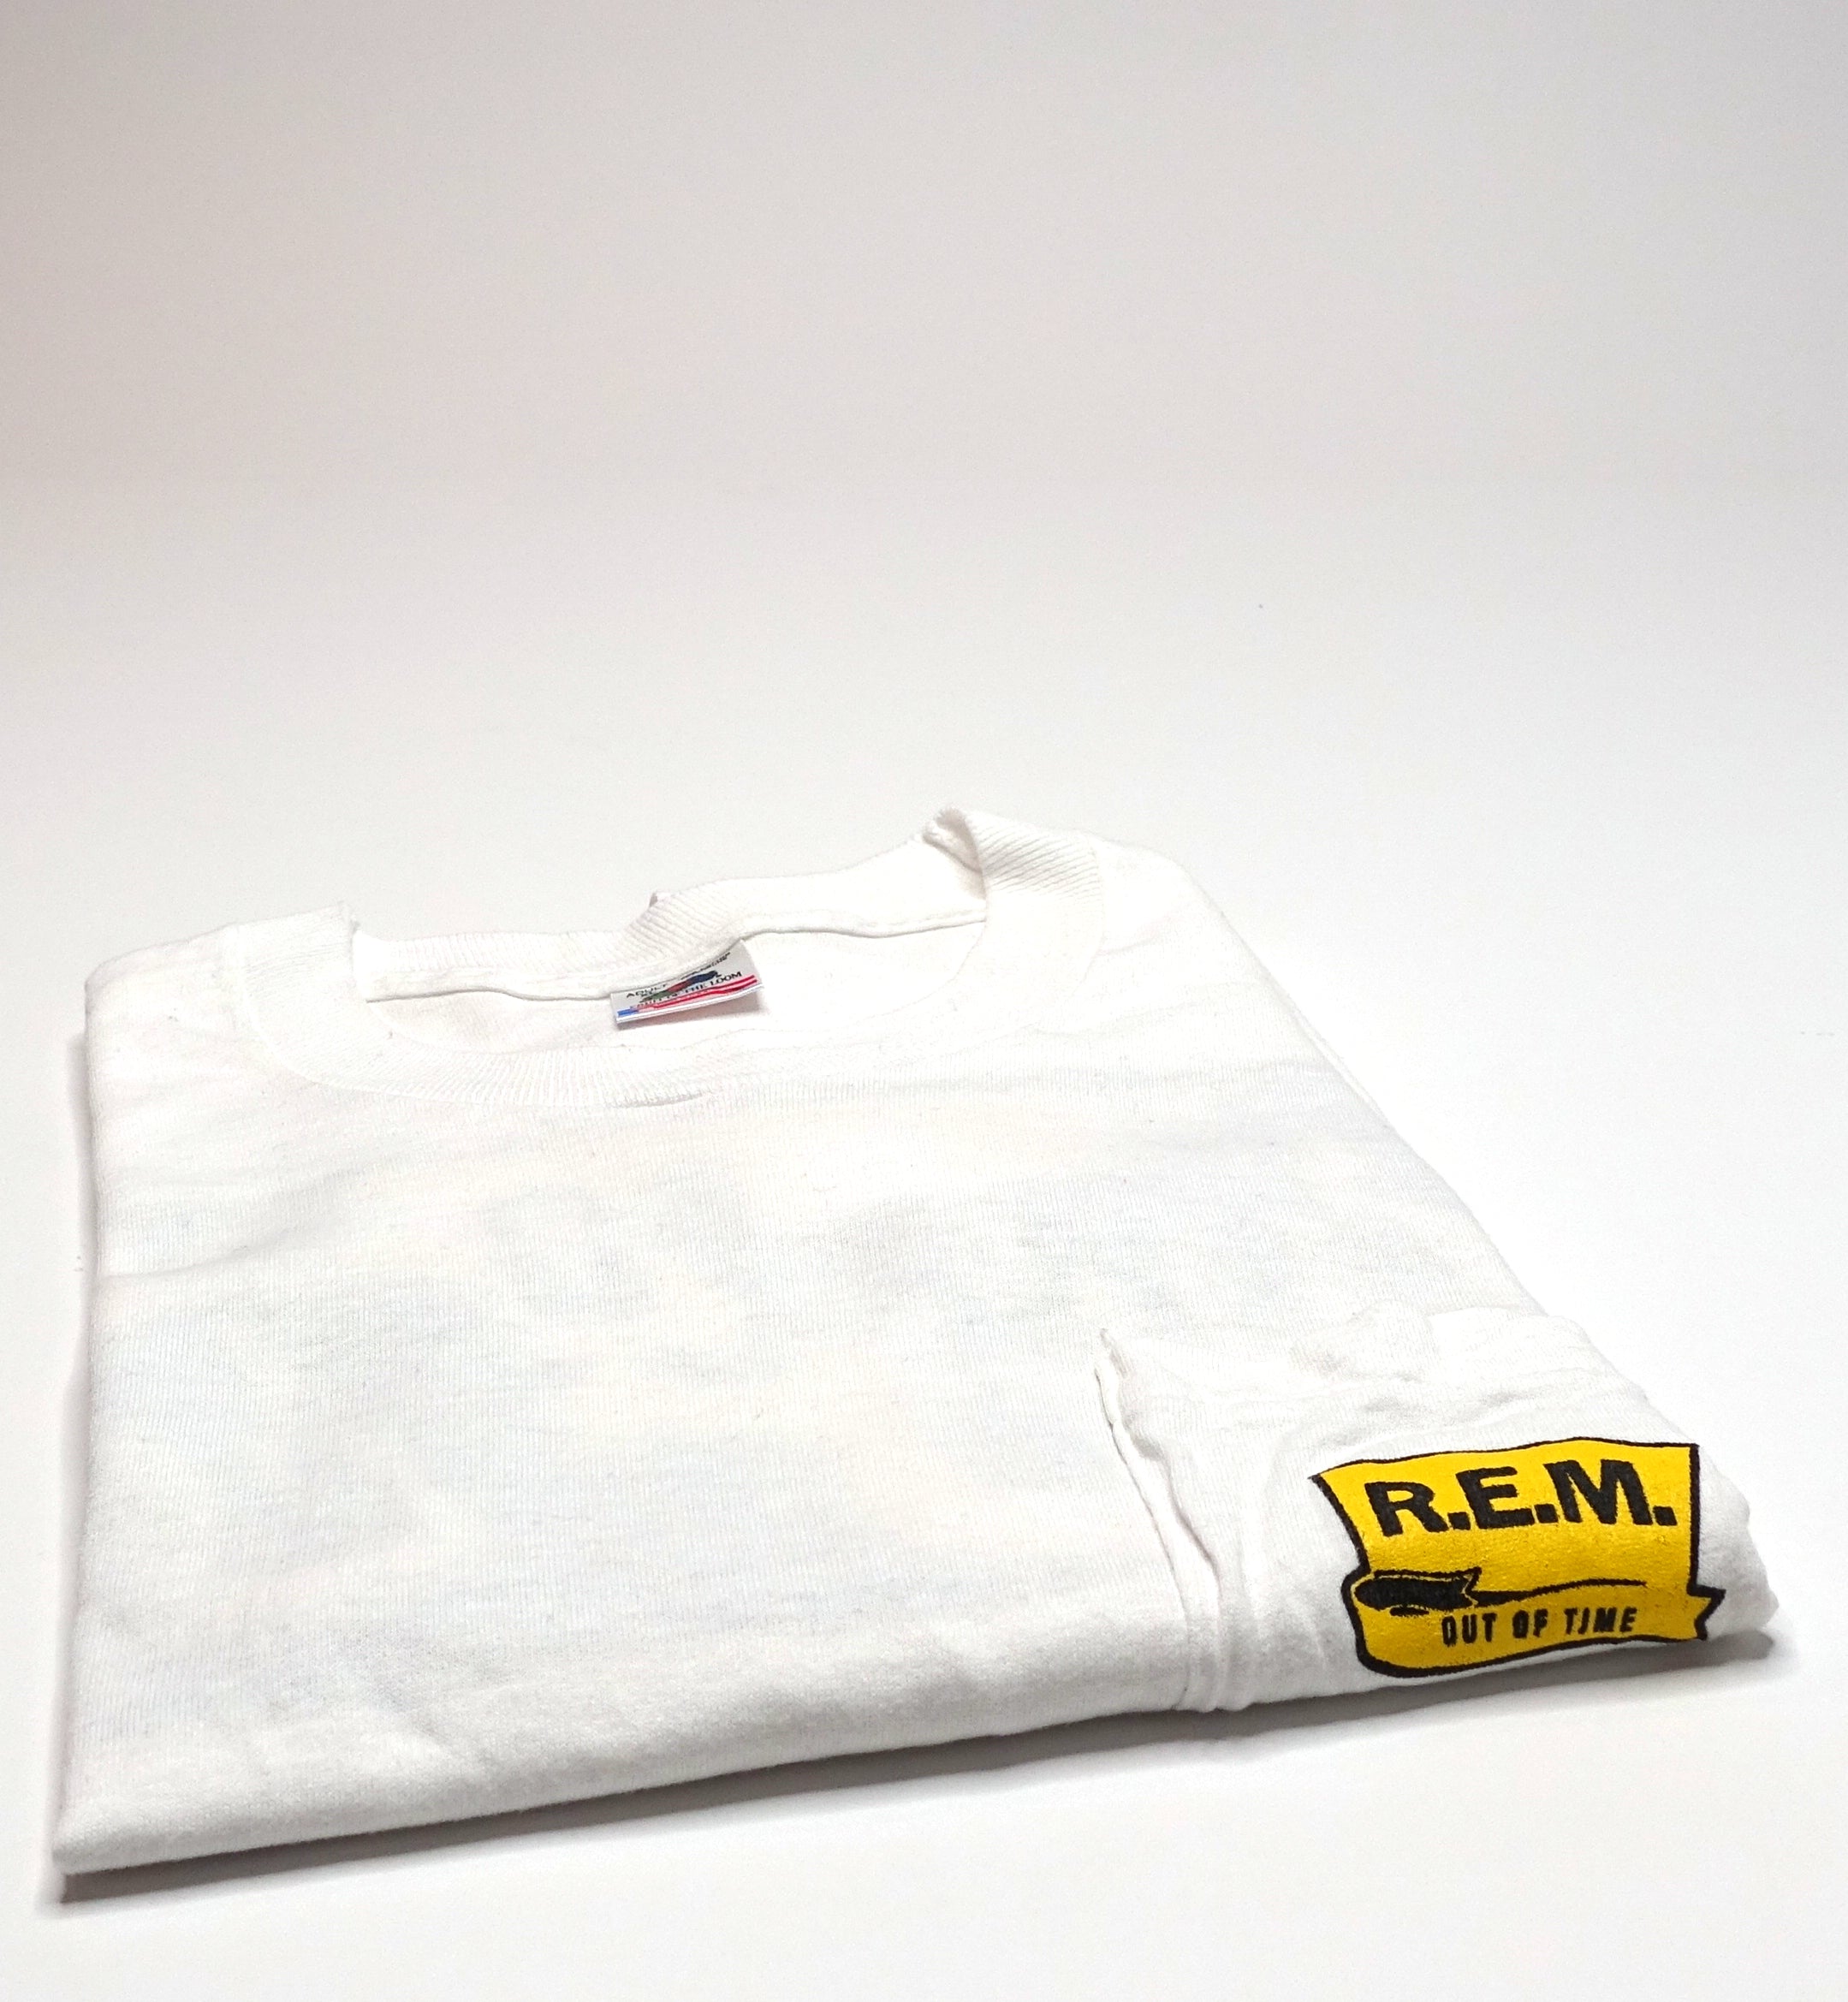 R.E.M. – Out Of Time 1991 Pocket Tour Shirt Size XL